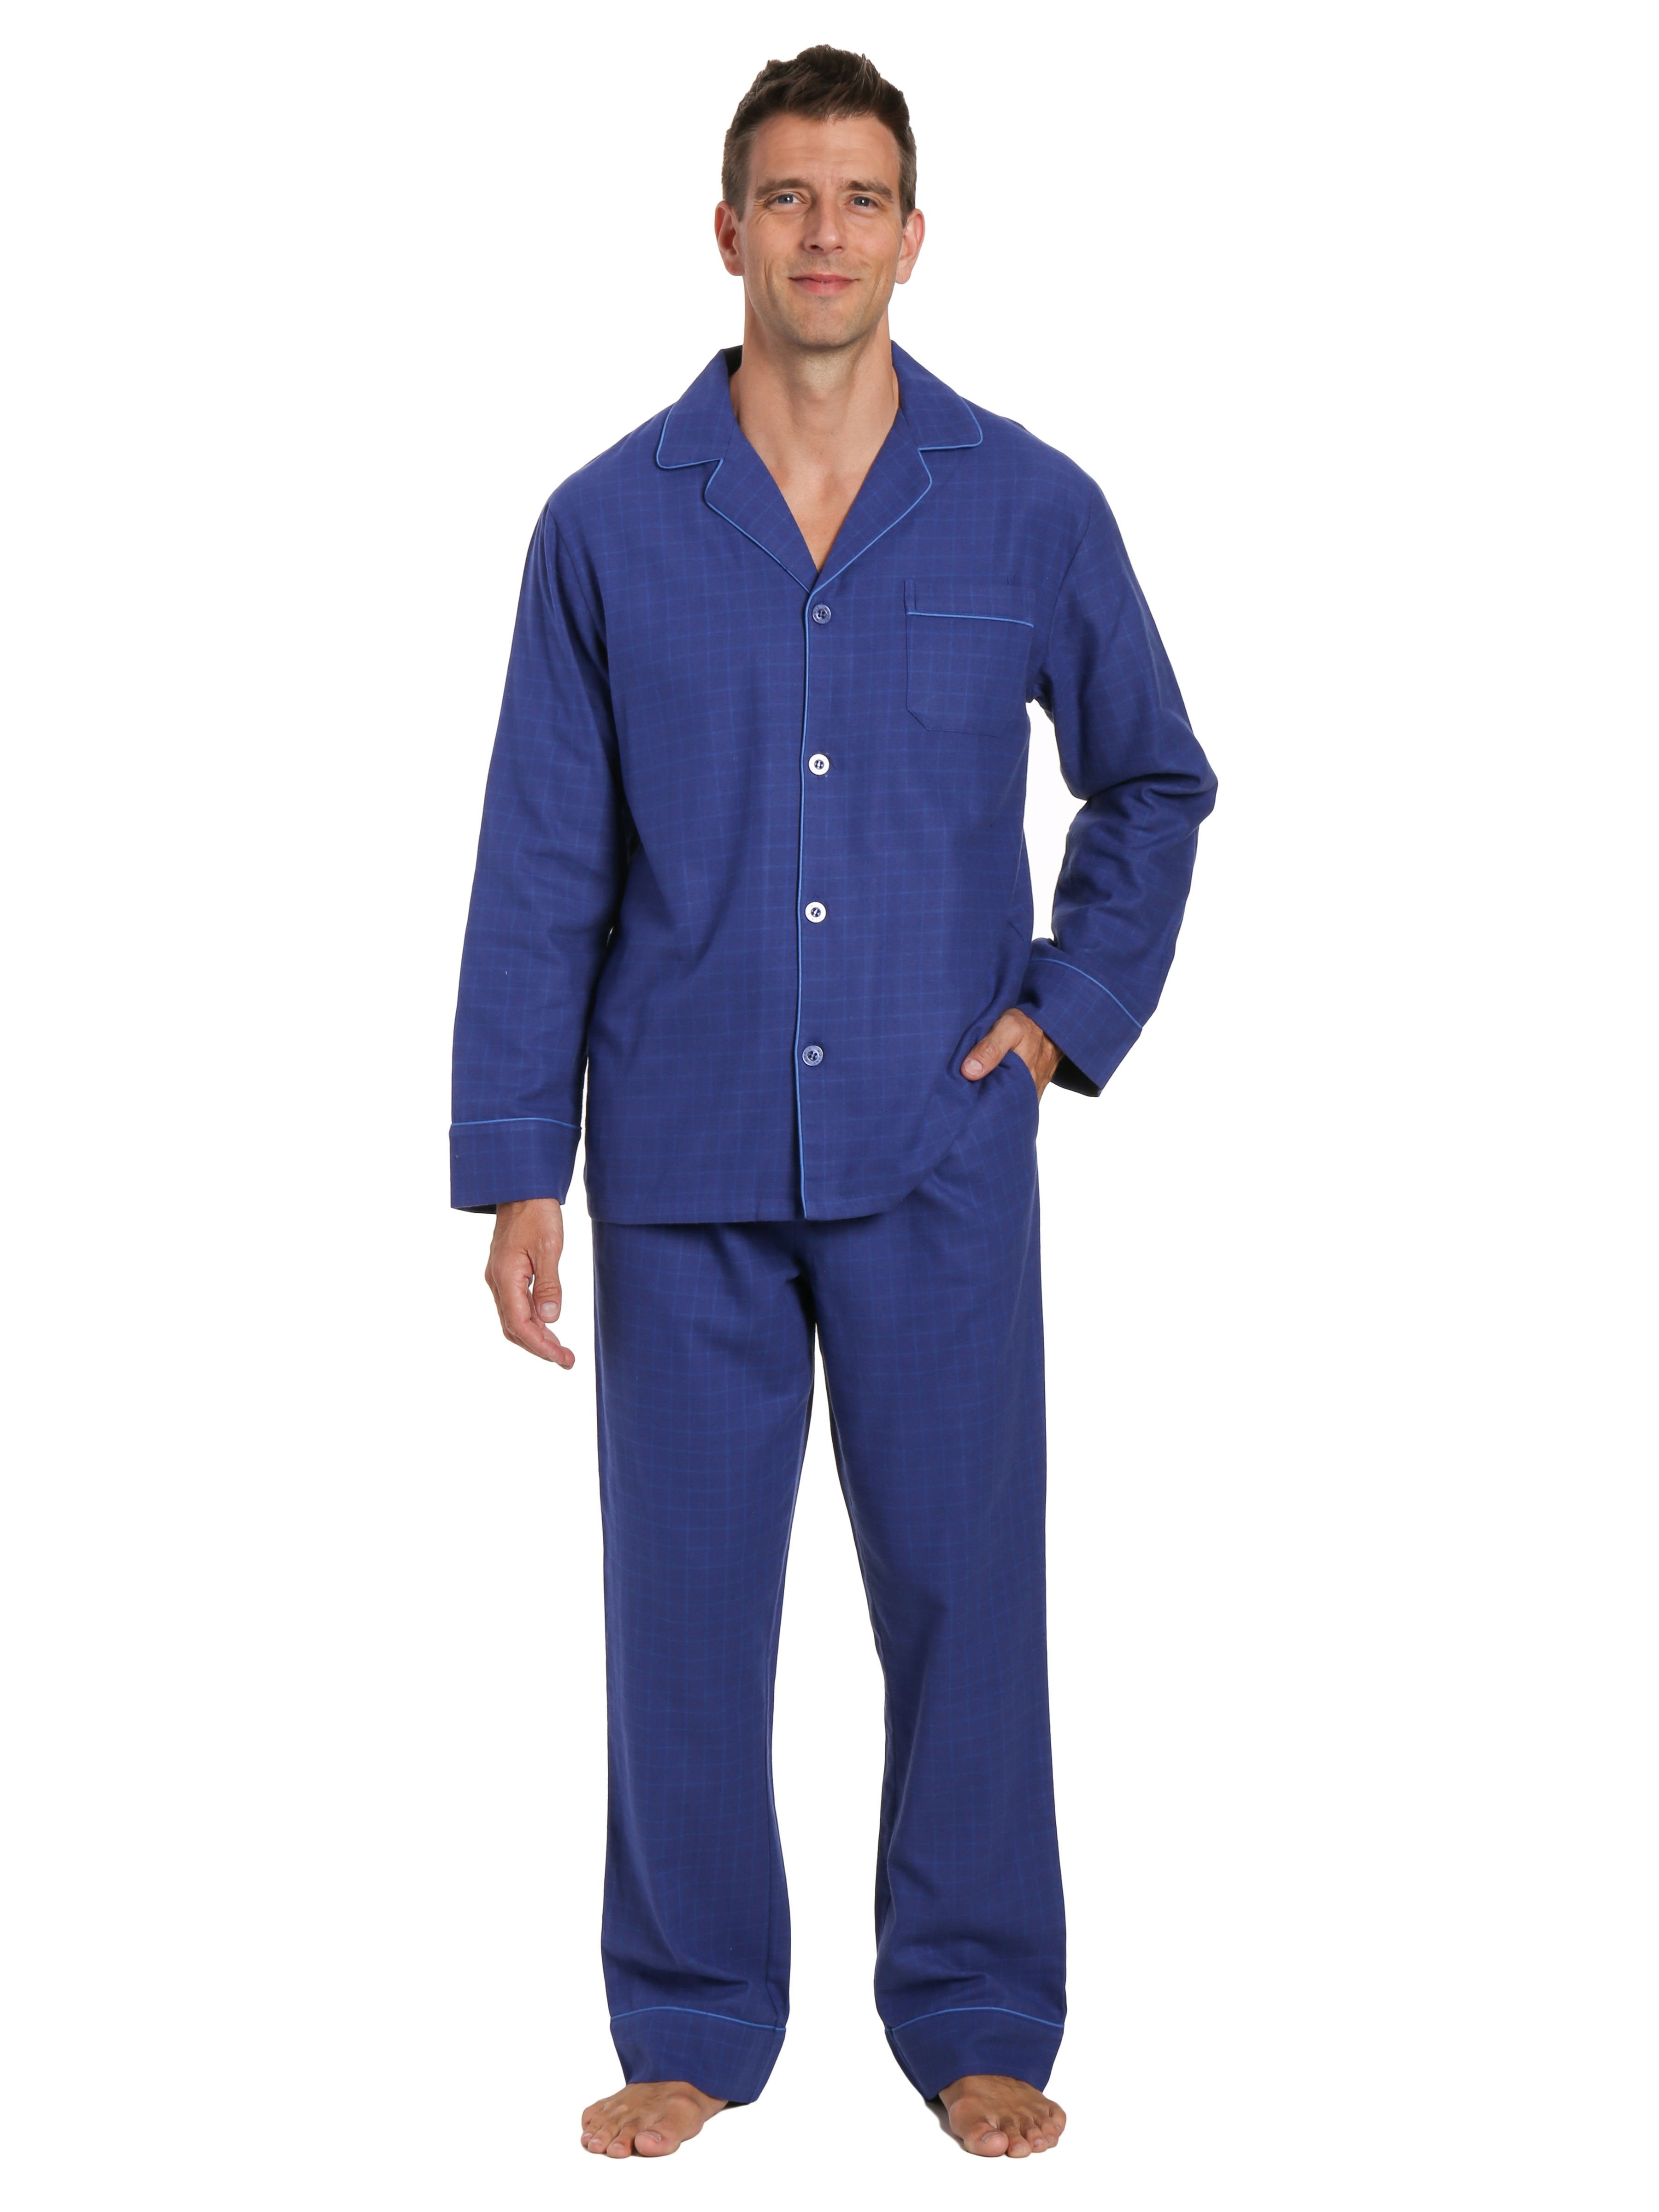 Box Packaged Men's Premium 100% Cotton Flannel Pajama Sleepwear Set - Windowpane Checks - Navy Blue